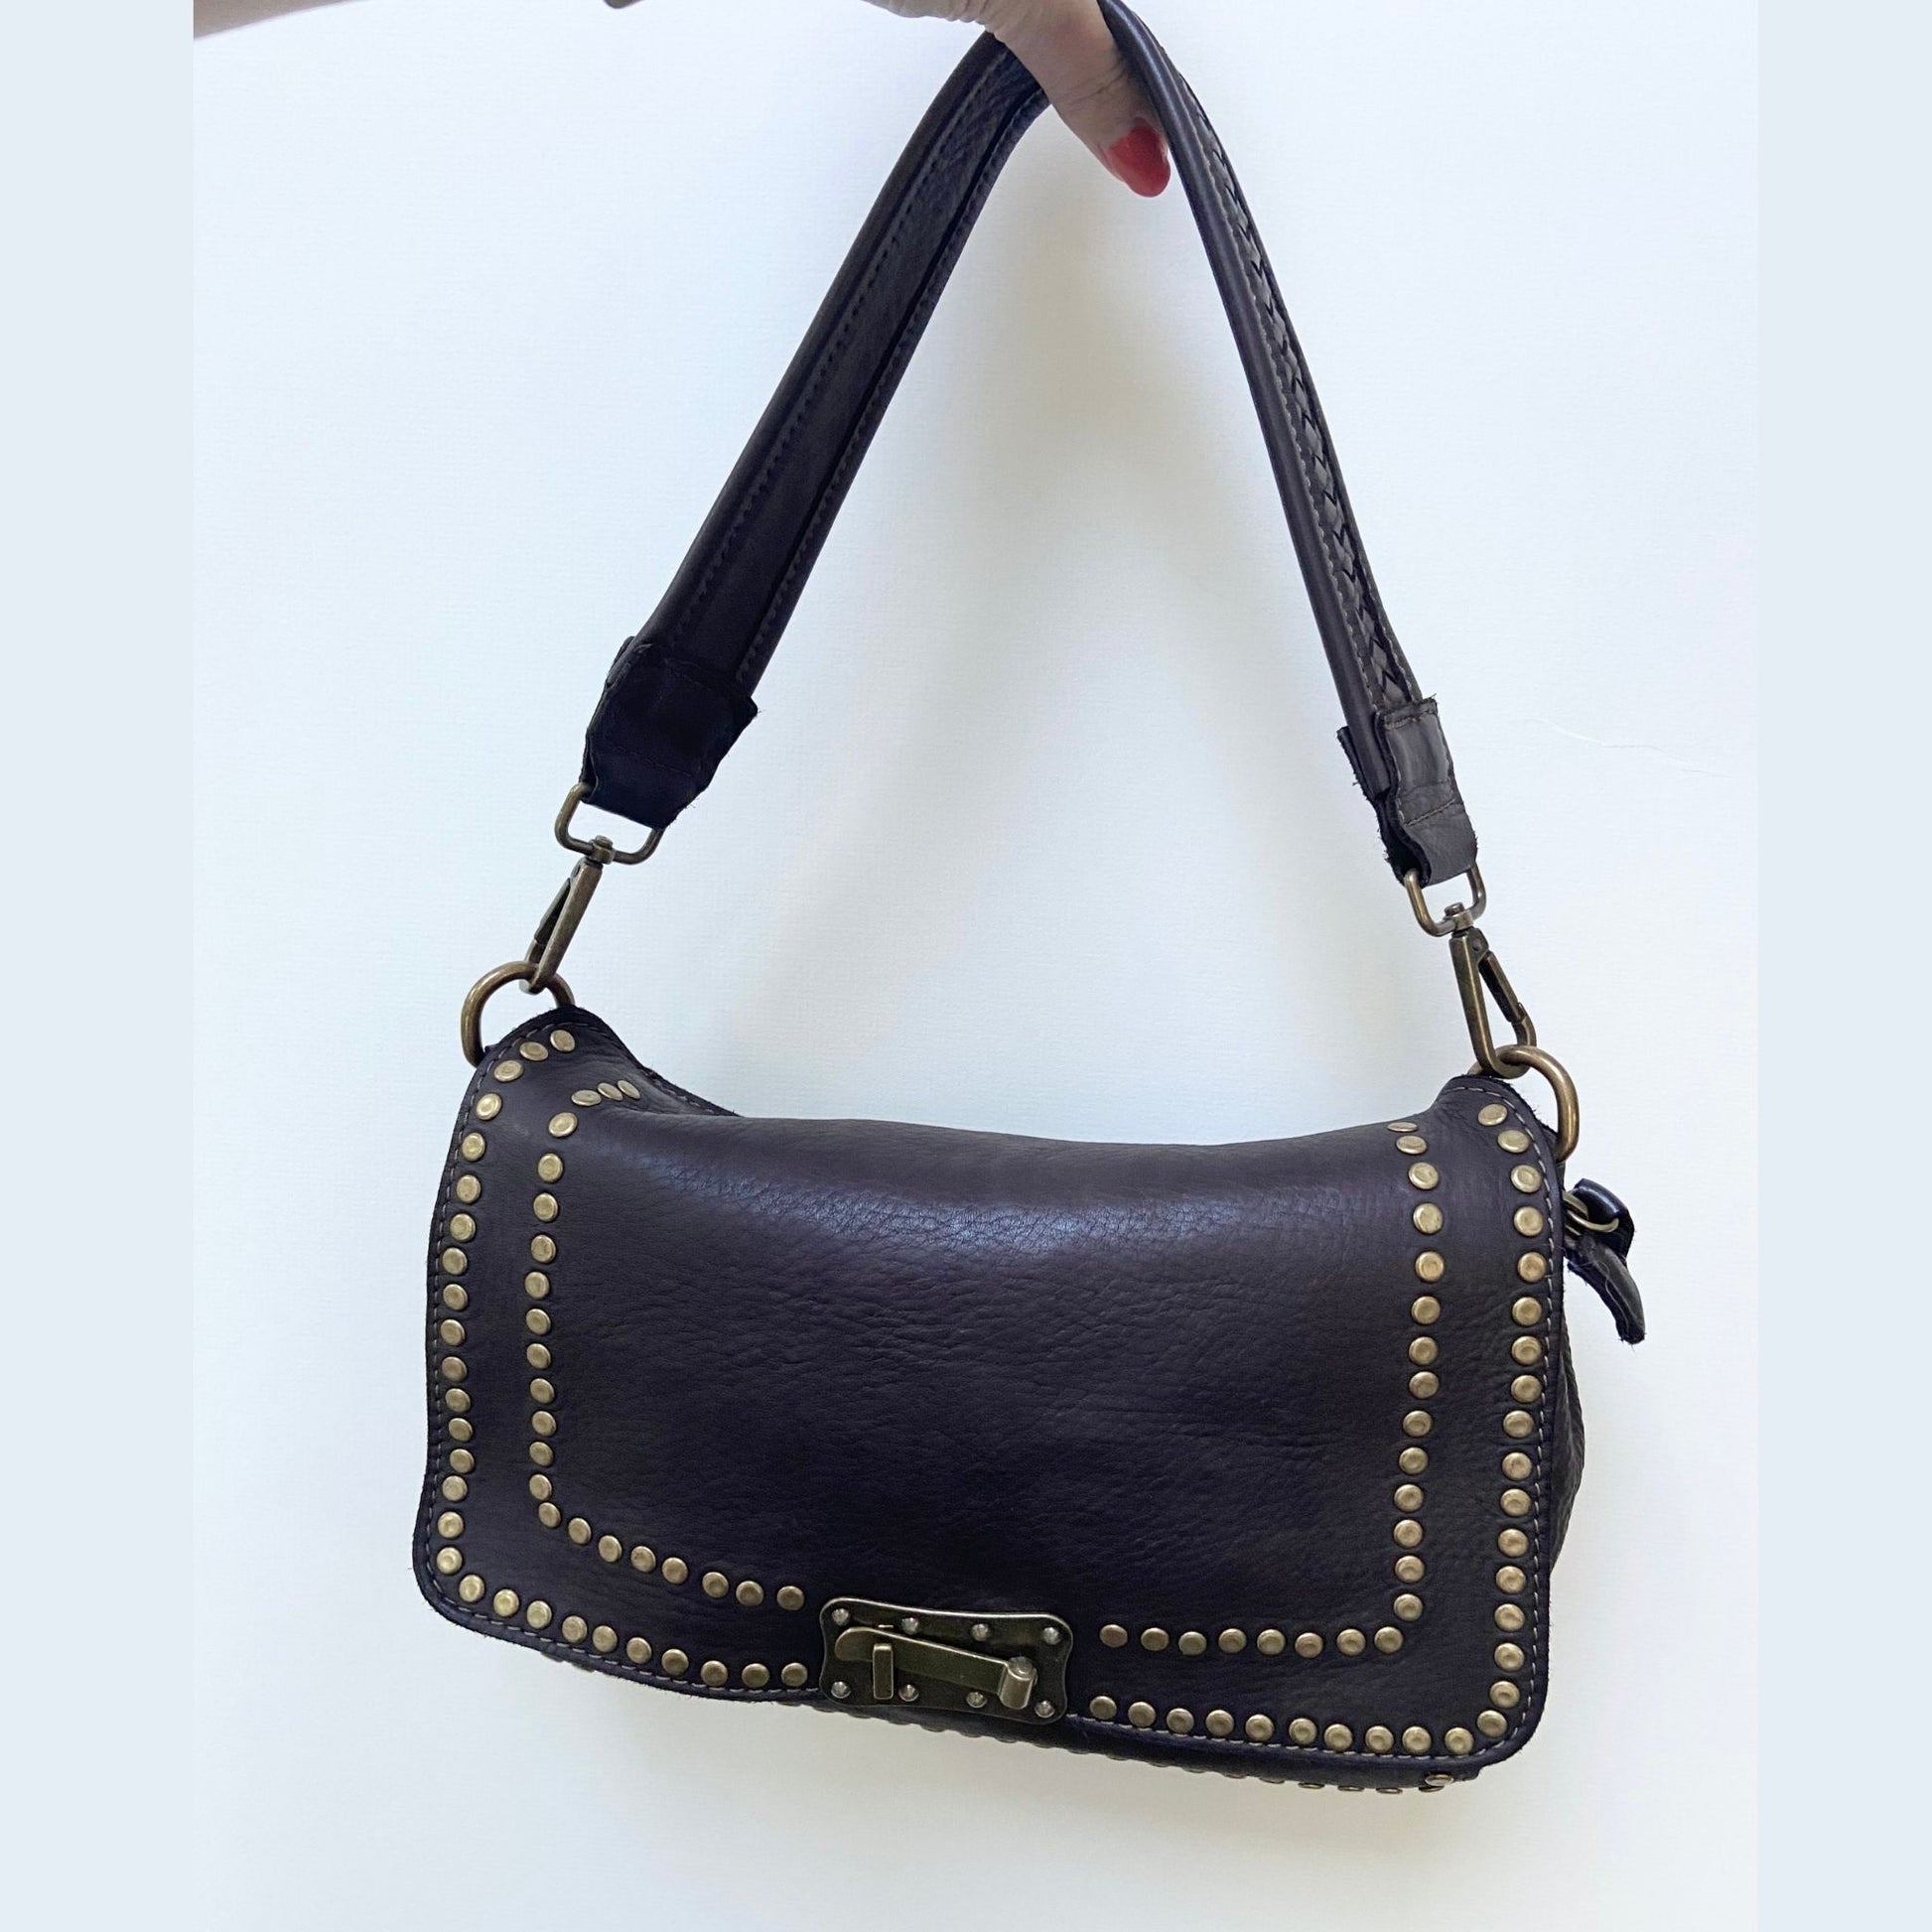 Bolongaro Trevor studded leather purse in black | ASOS